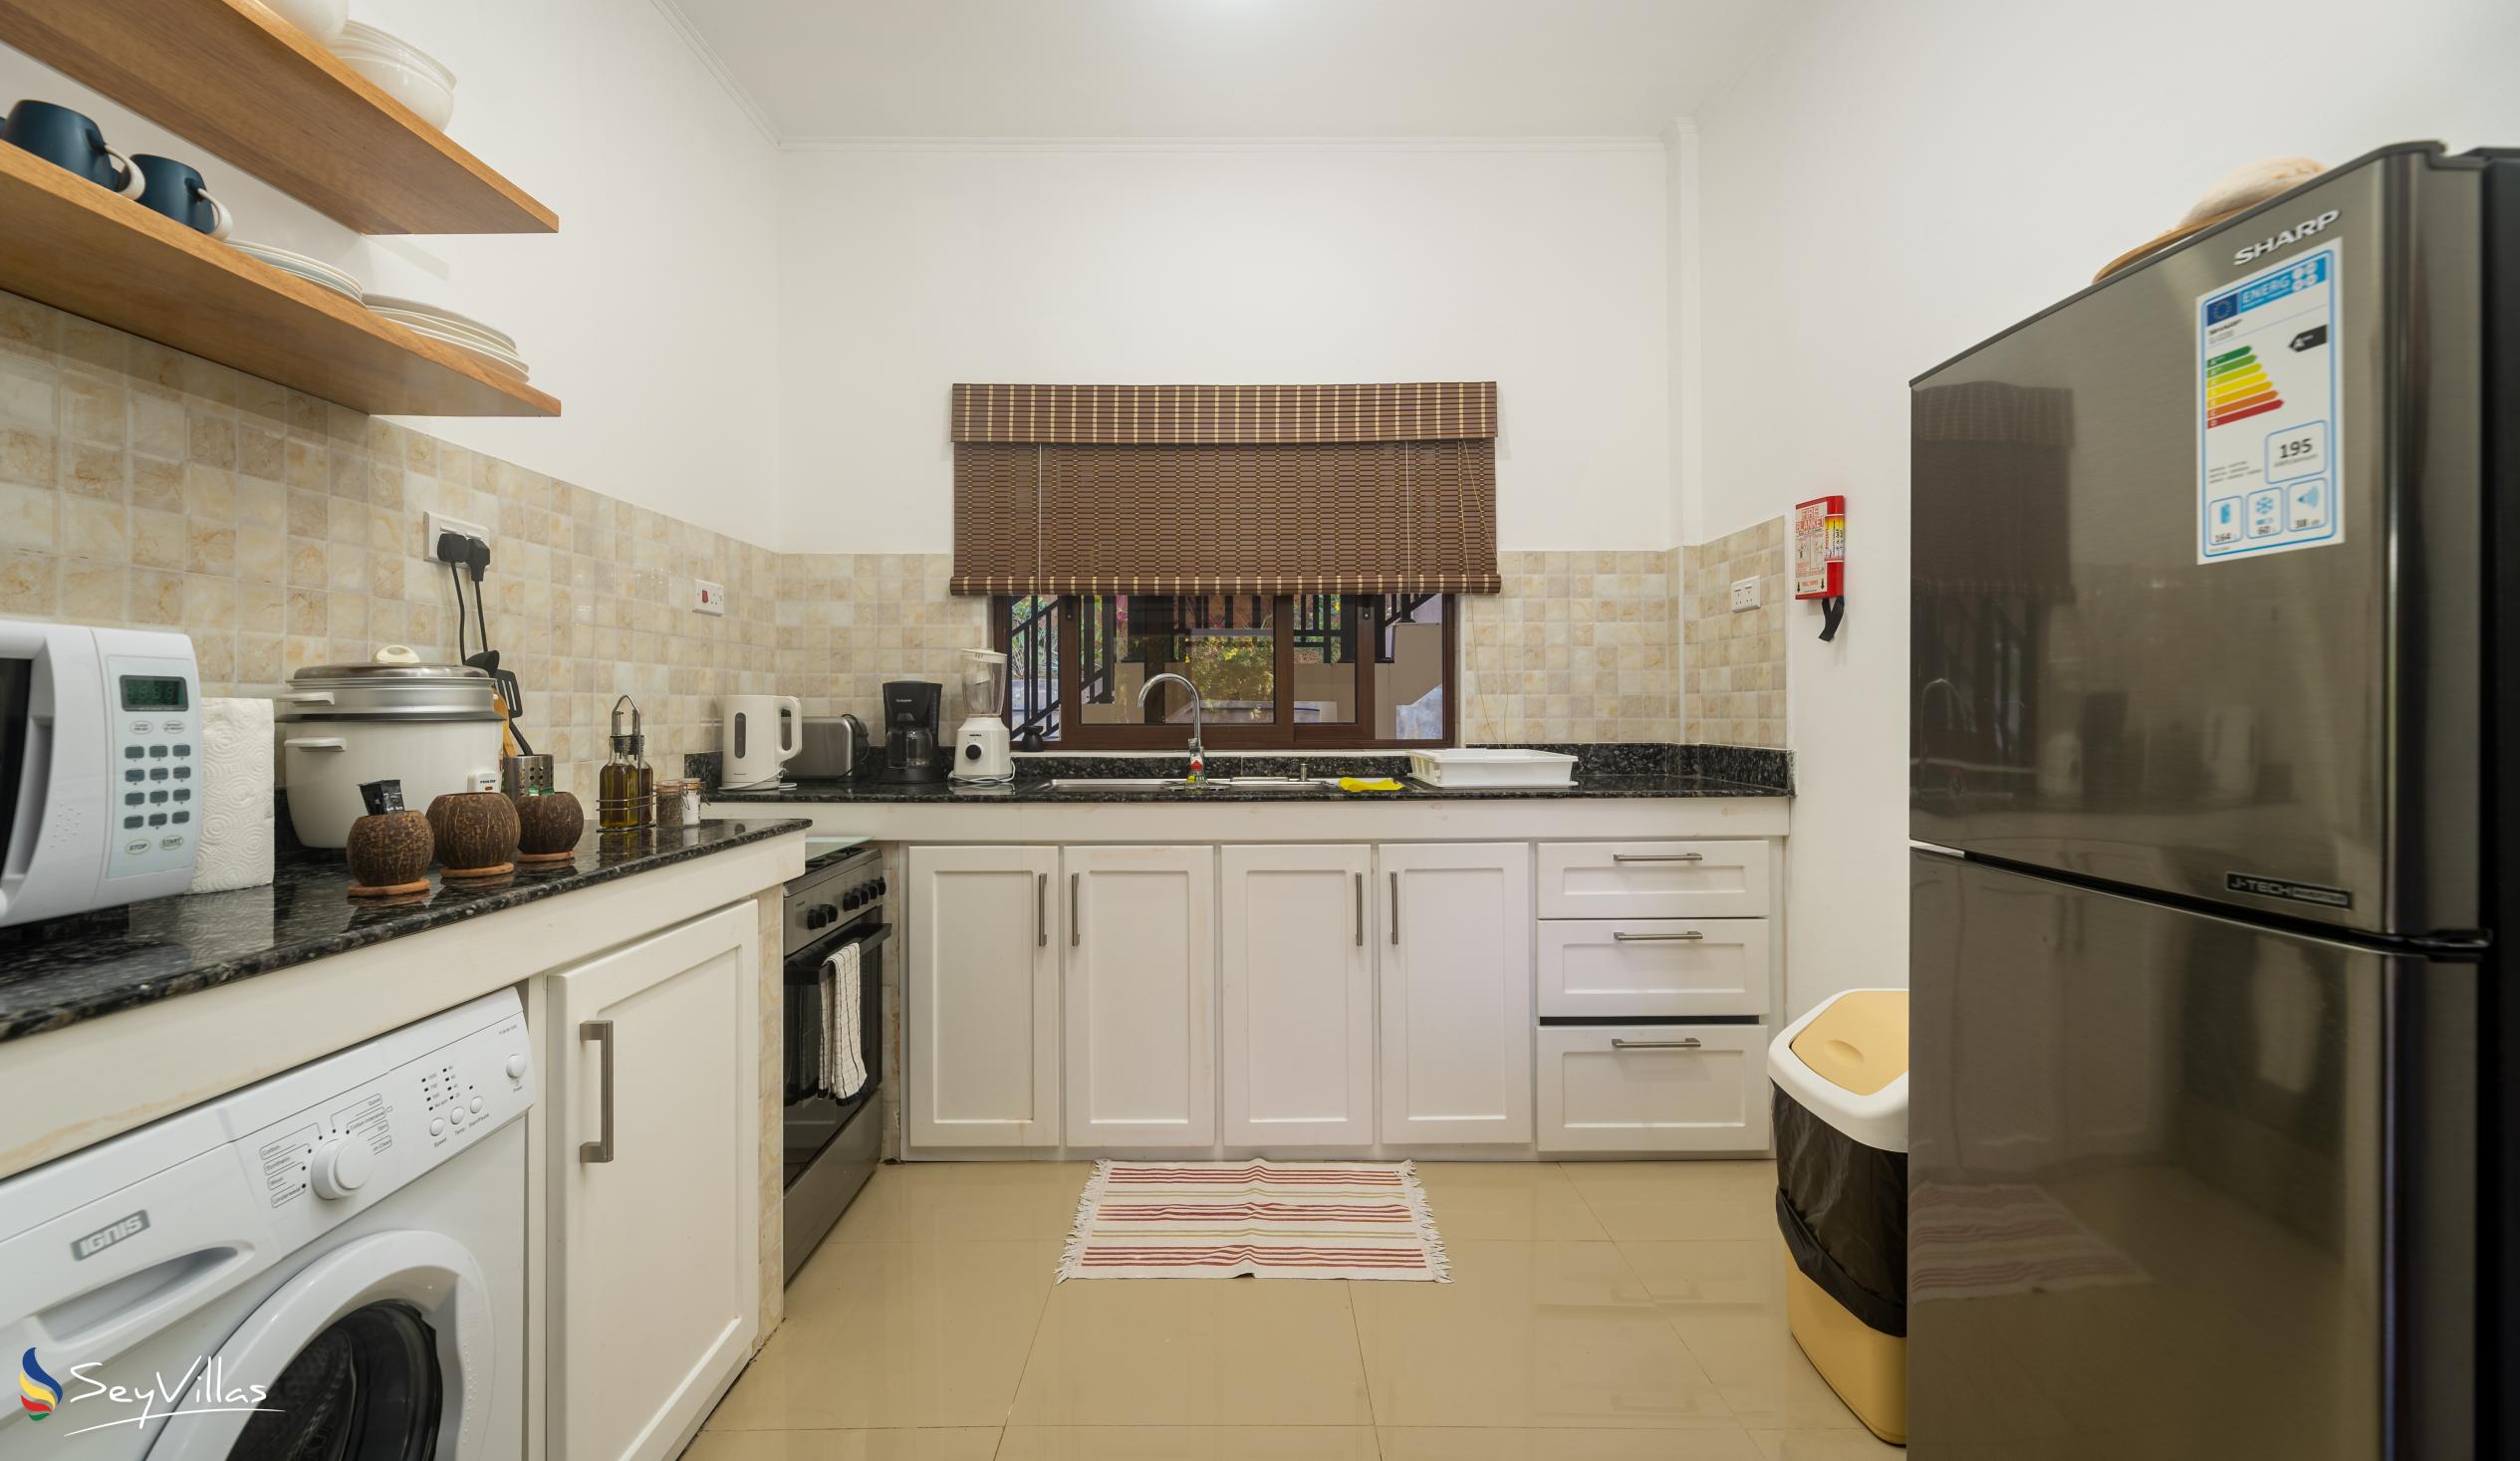 Foto 26: Kanasuk Self Catering Apartments - Appartamento Cinnamon con 2 camere - Mahé (Seychelles)